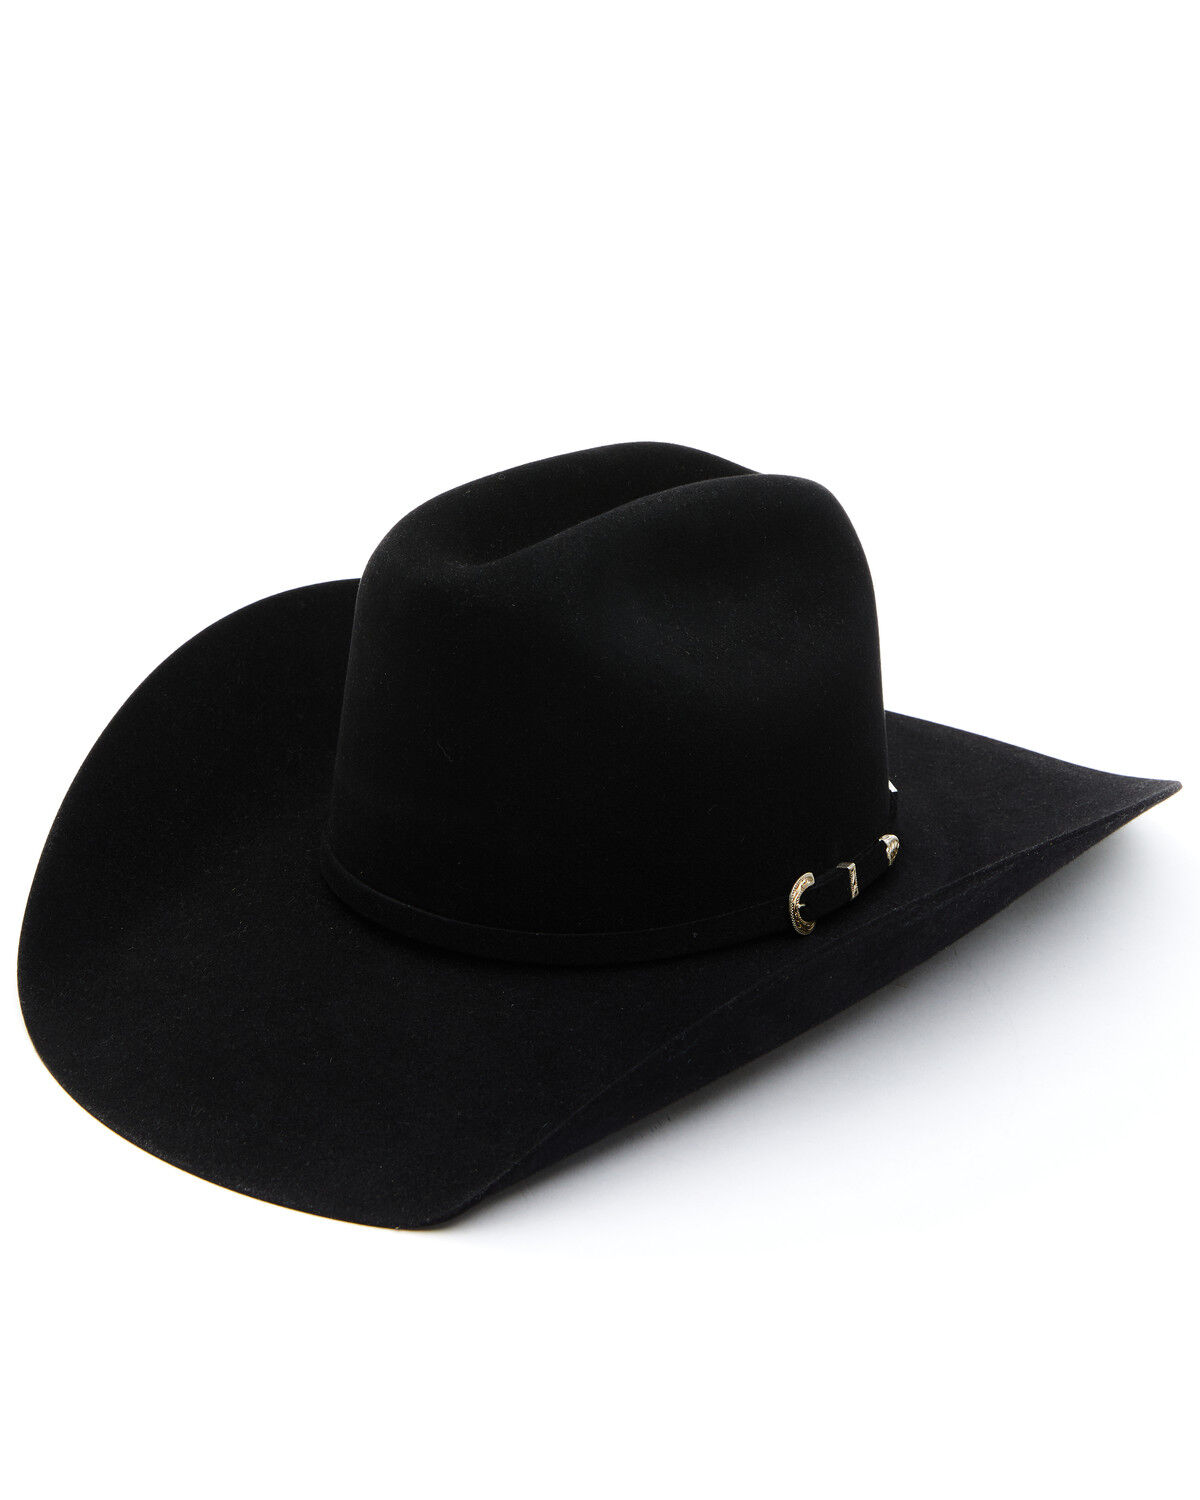 Black Band Western Felt Show Cowboy Hat ADULT Rodeo Elastic Small Medium OSFA